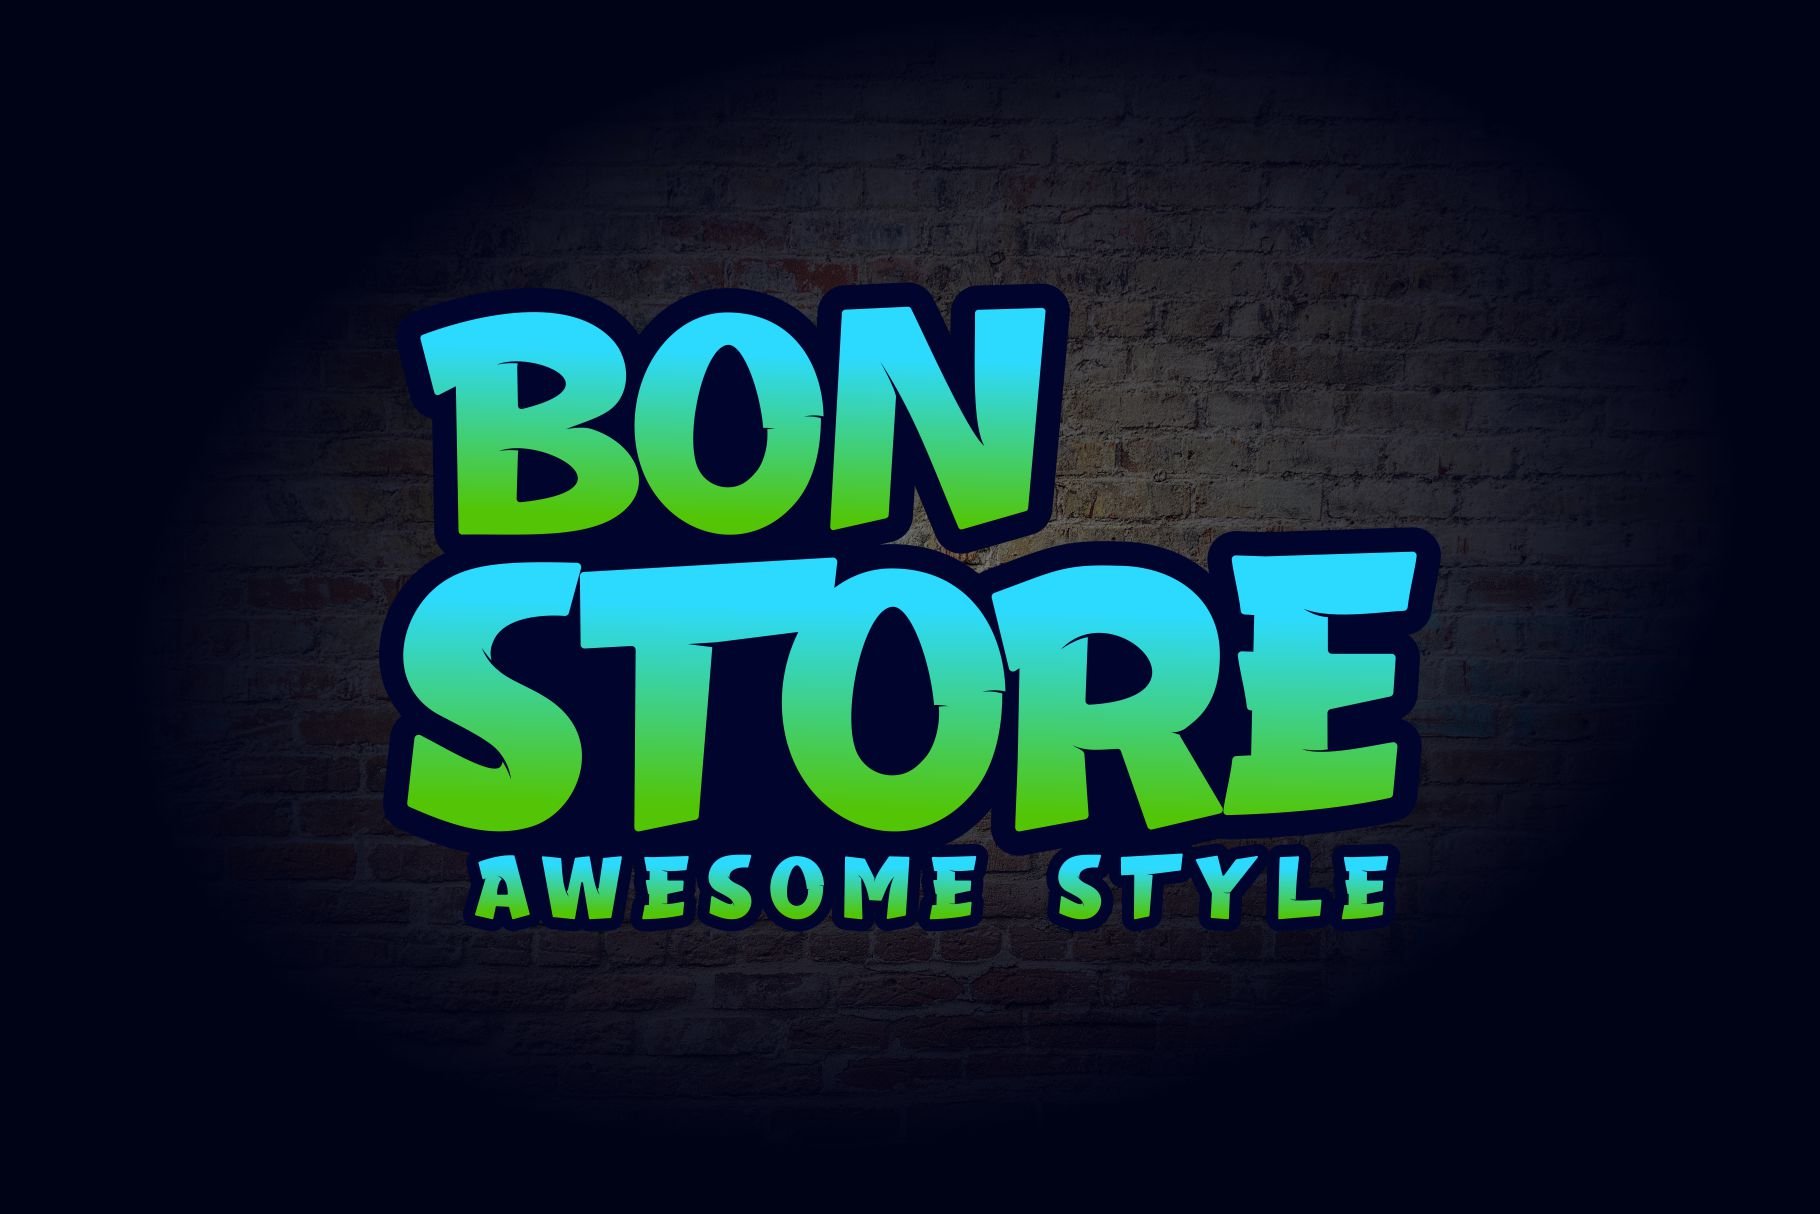 Bonstore - Display Font cover image.